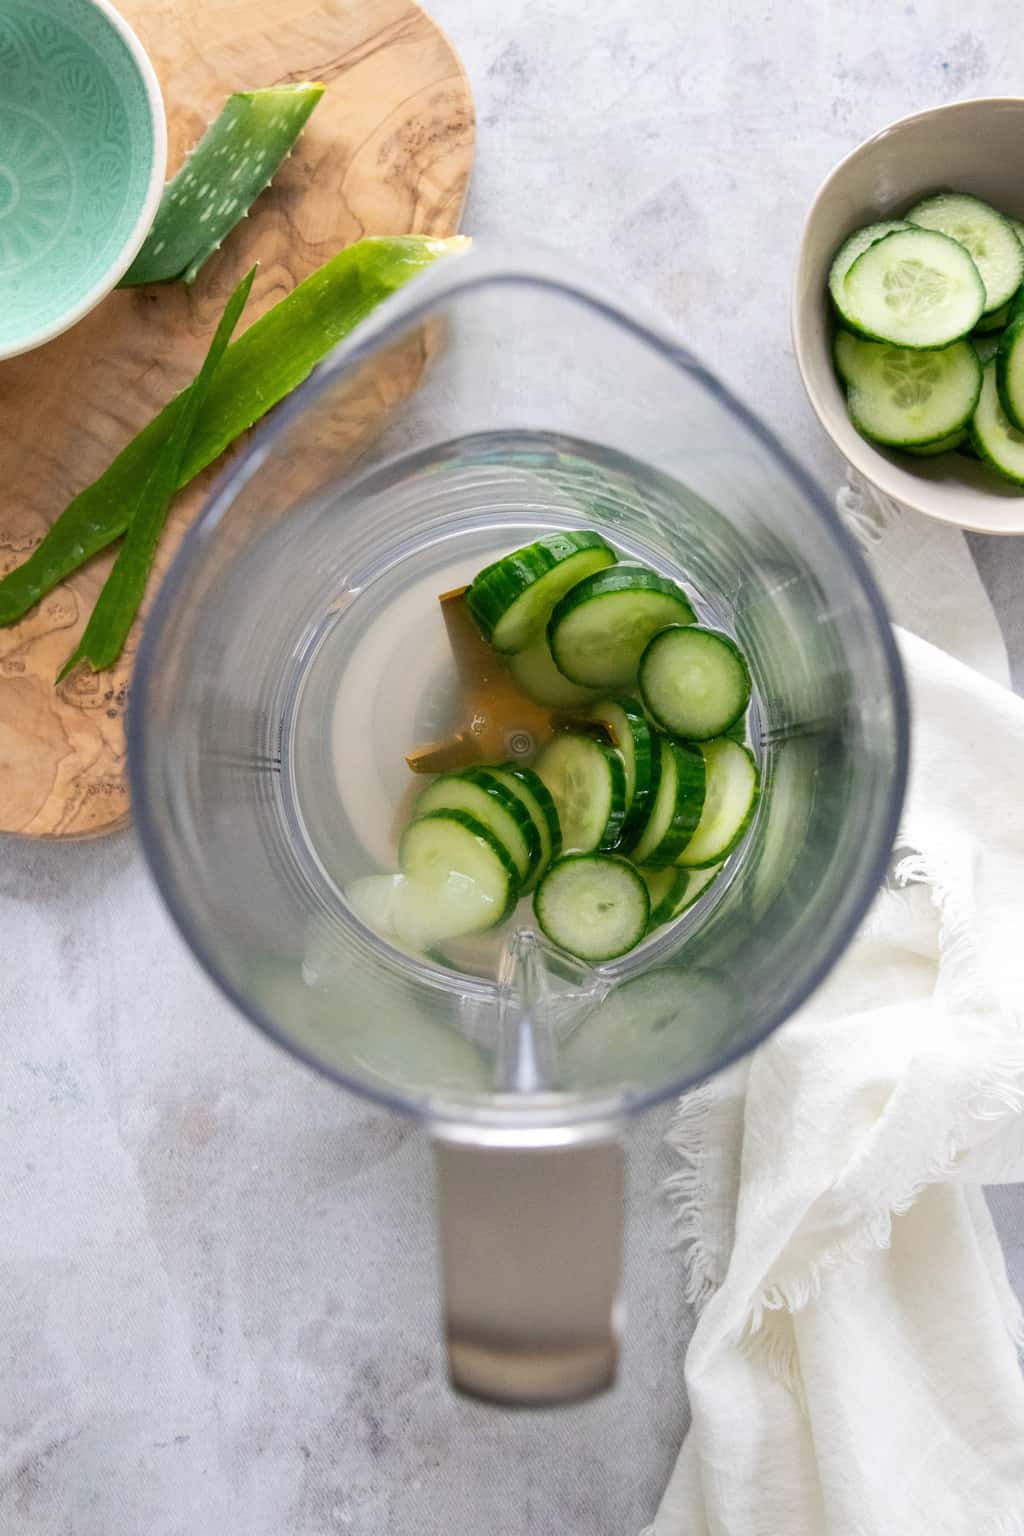 How to make cucumber aloe water